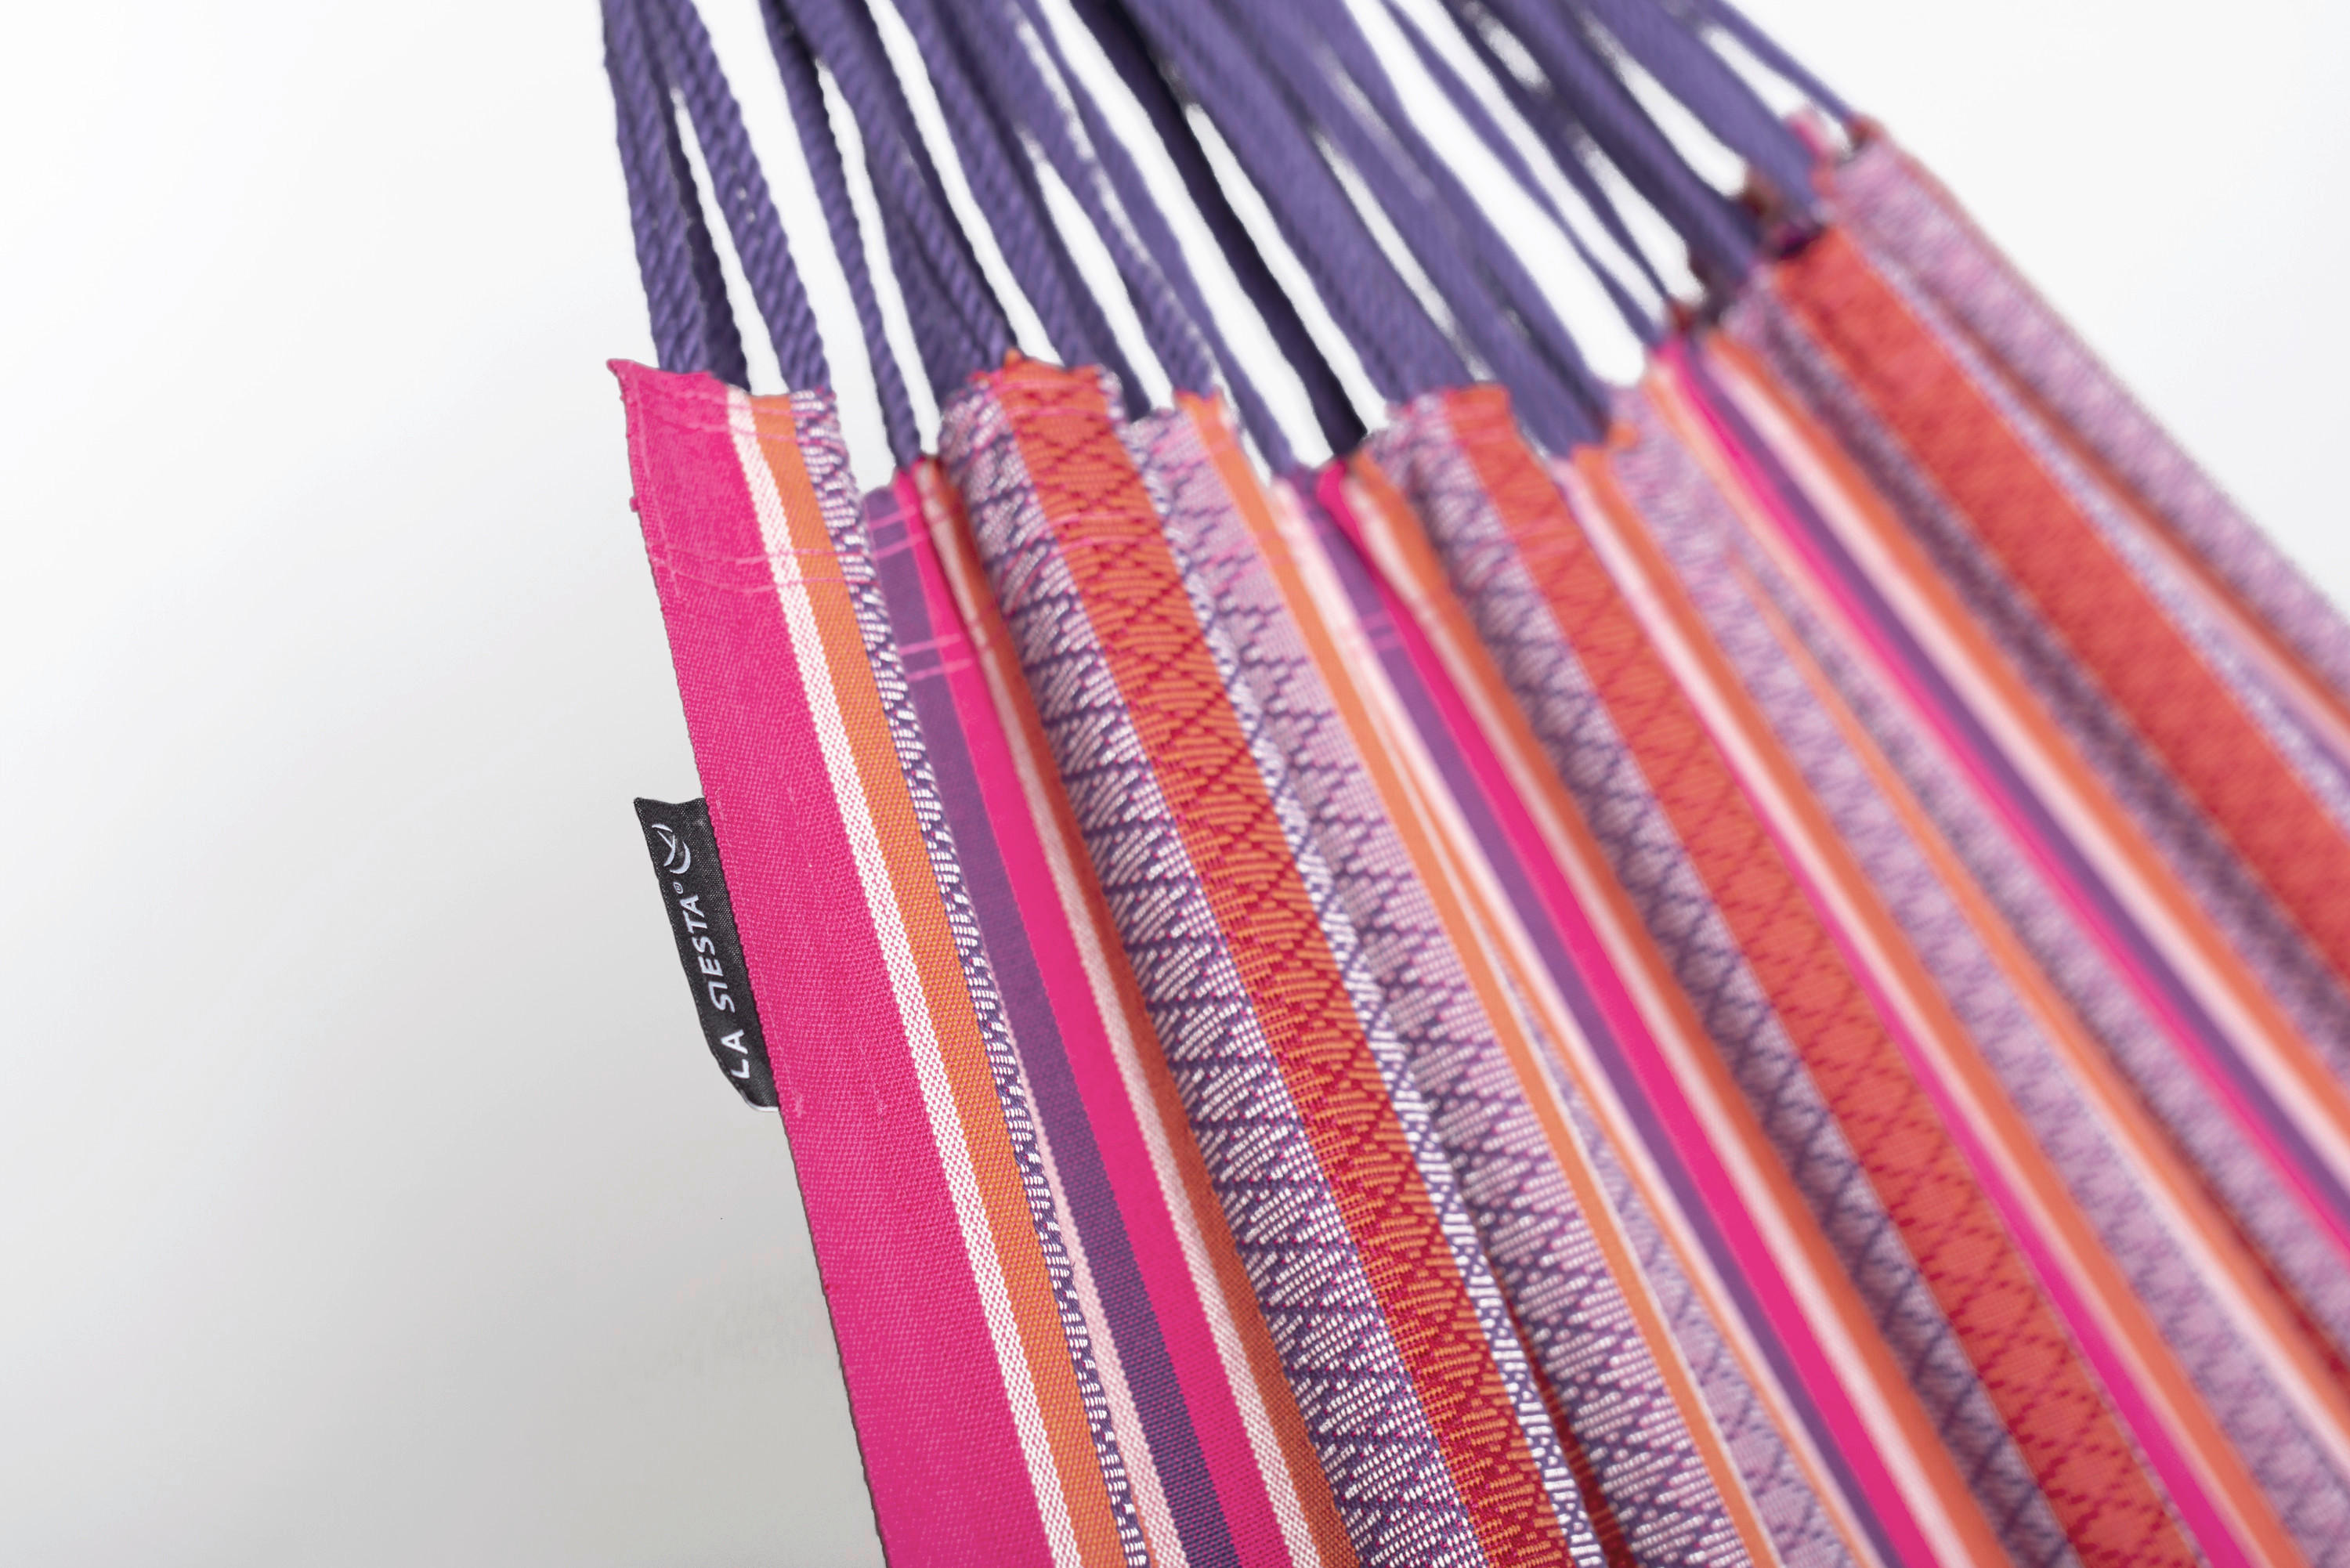 HÄNGEMATTE kingsize  - Pink/Lila, KONVENTIONELL, Textil (180/400cm) - La Siesta